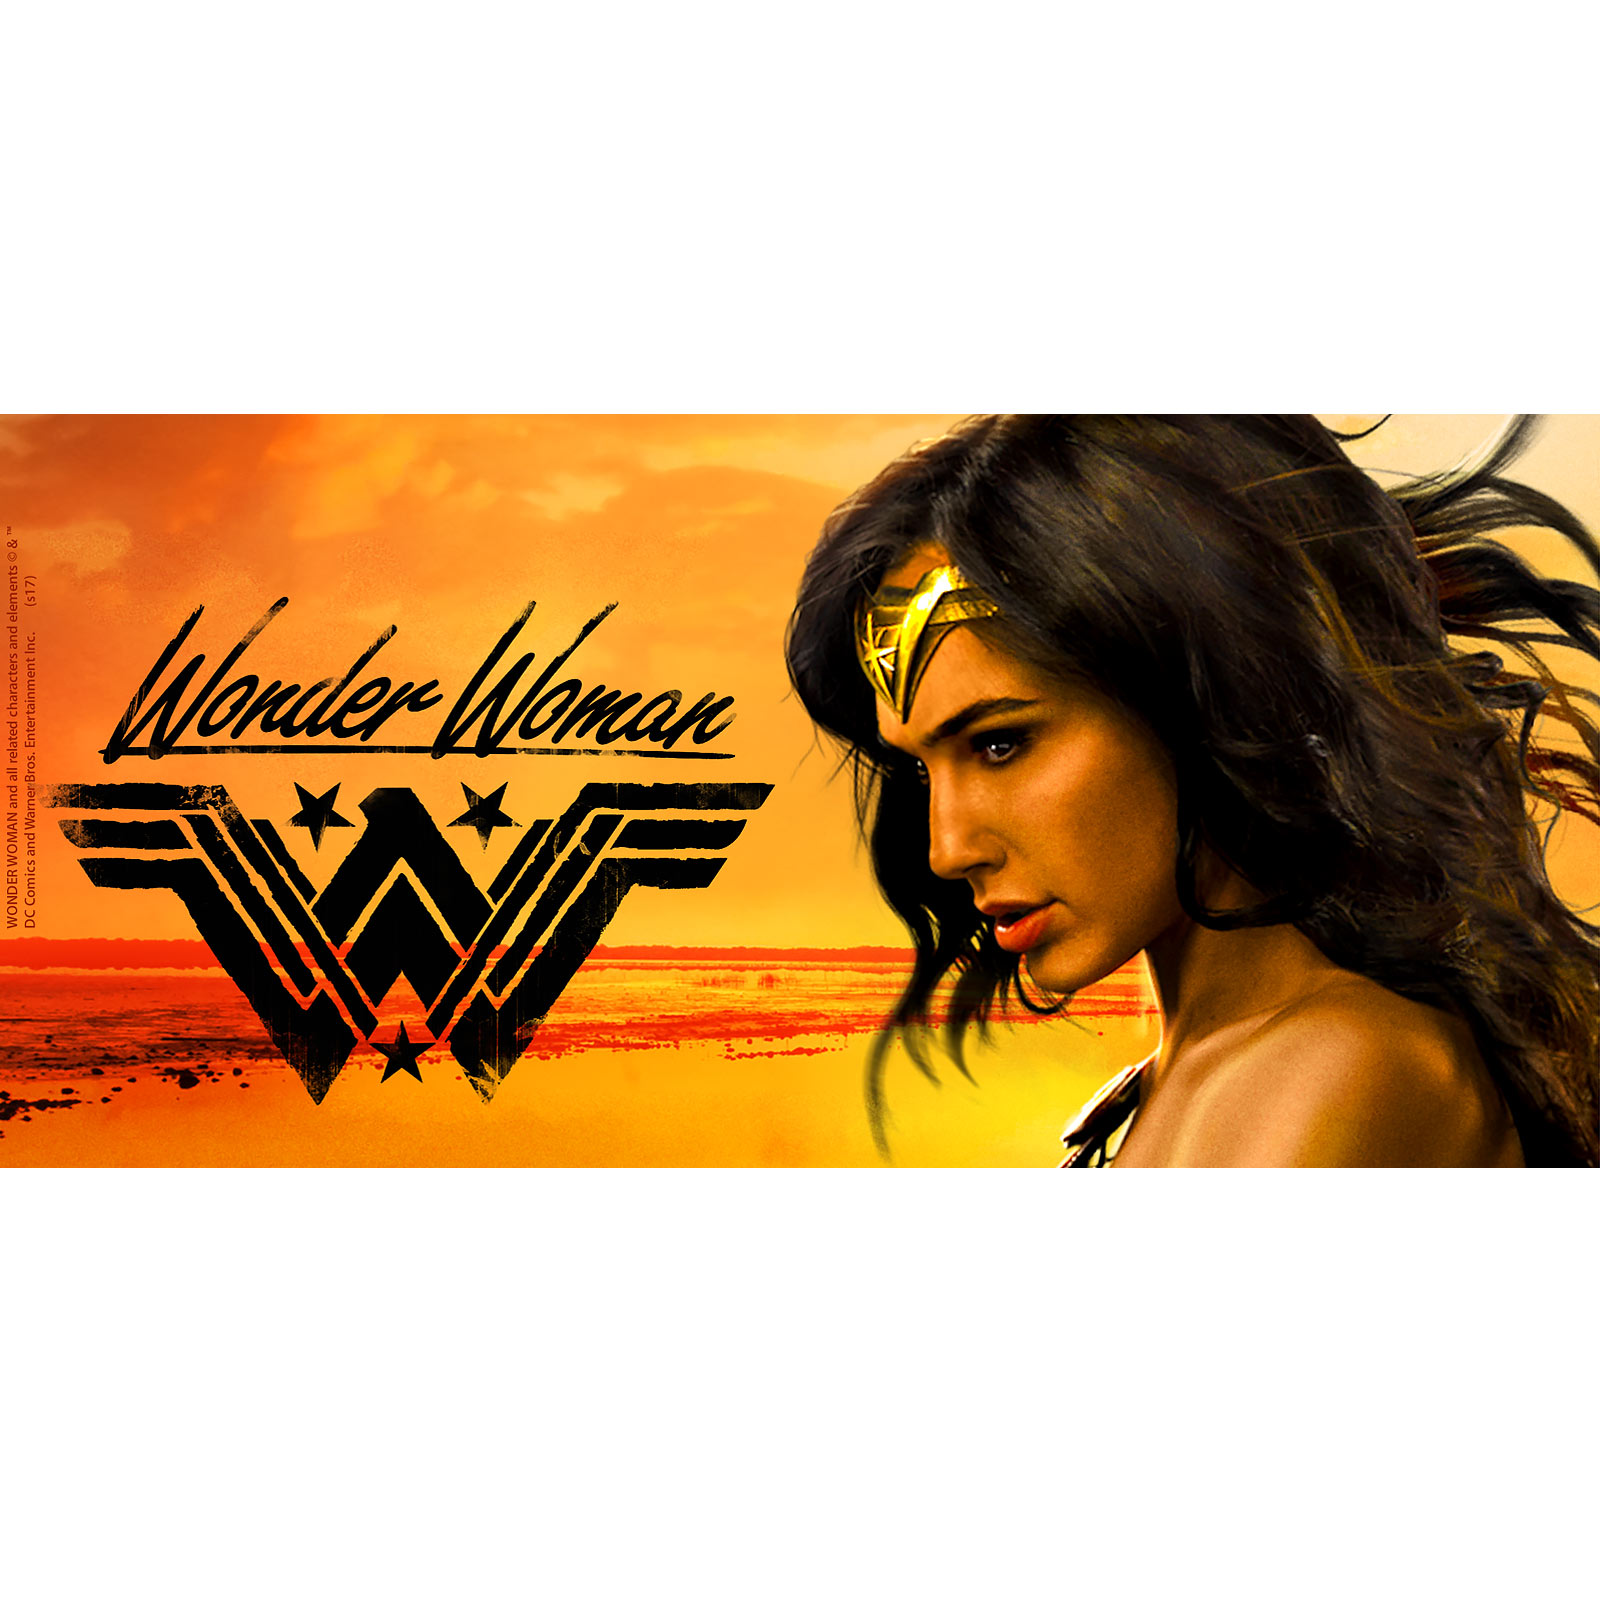 Wonder Woman - Movie Mug